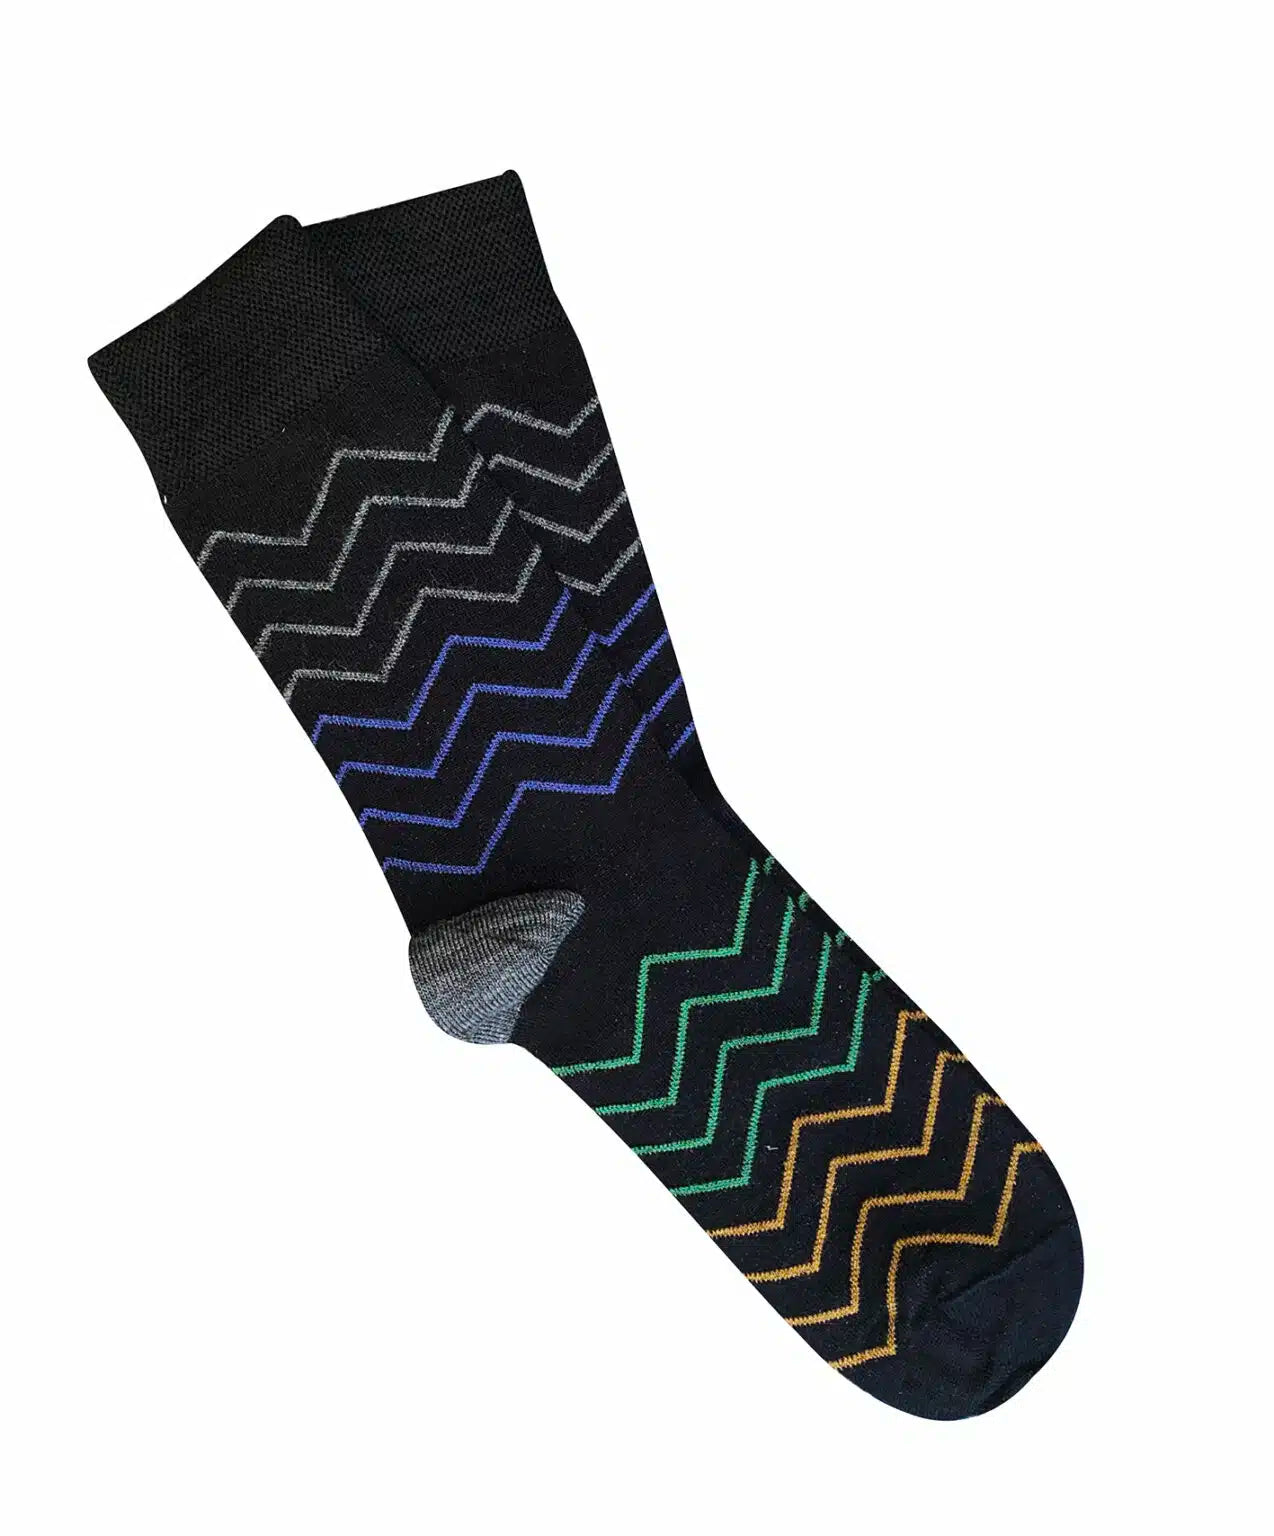 'Waves' Merino Socks - Tightology socks Tightology Black 